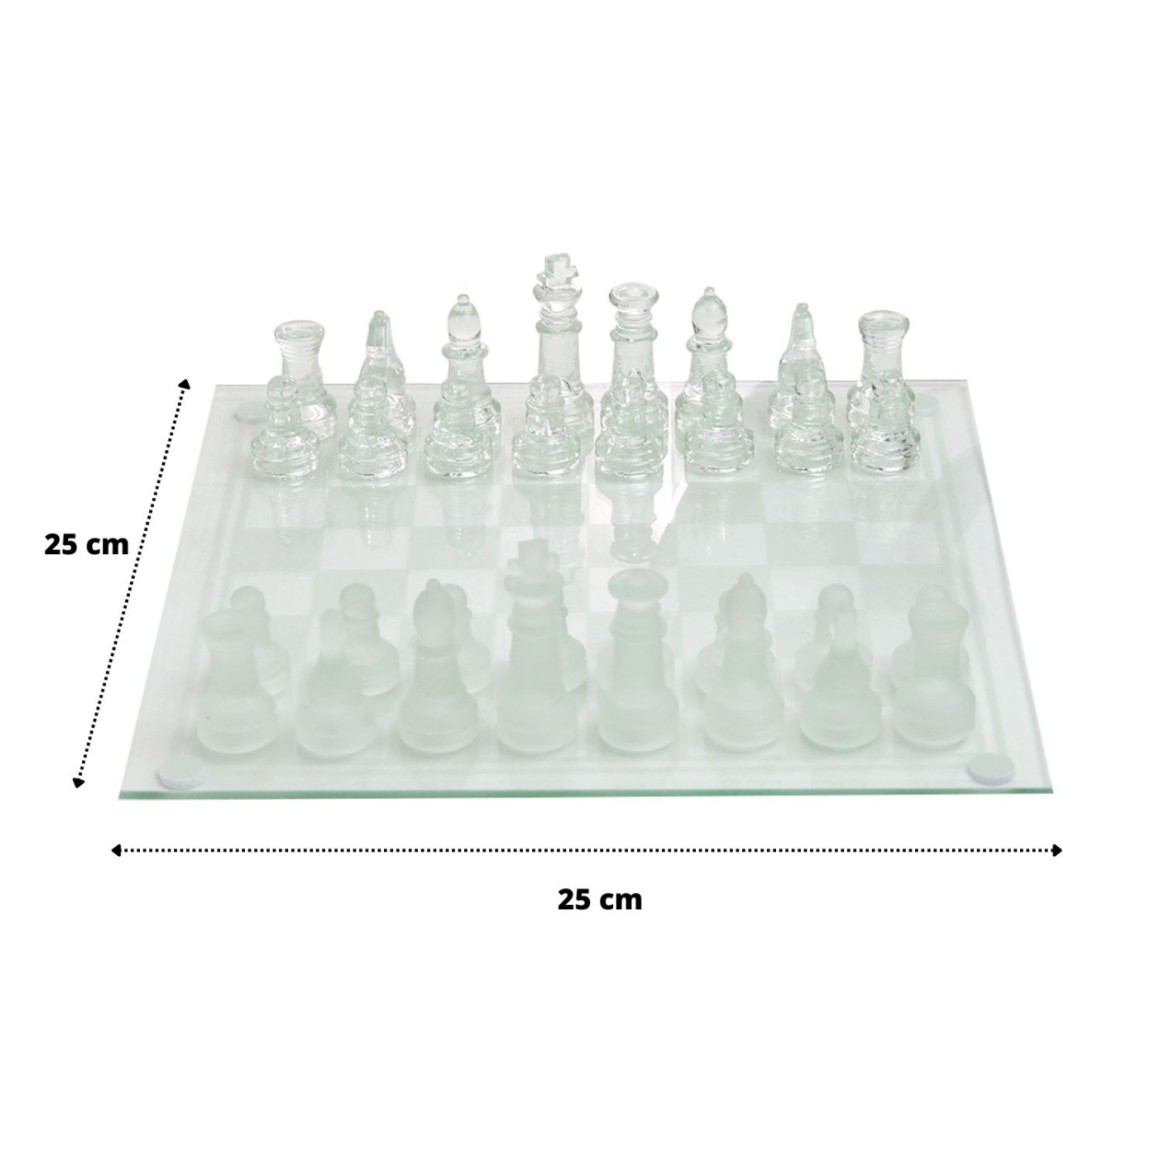 Jogo de xadrez em vidro.  Xadrez jogo, Tabuleiro de xadrez, Jogo de xadrez